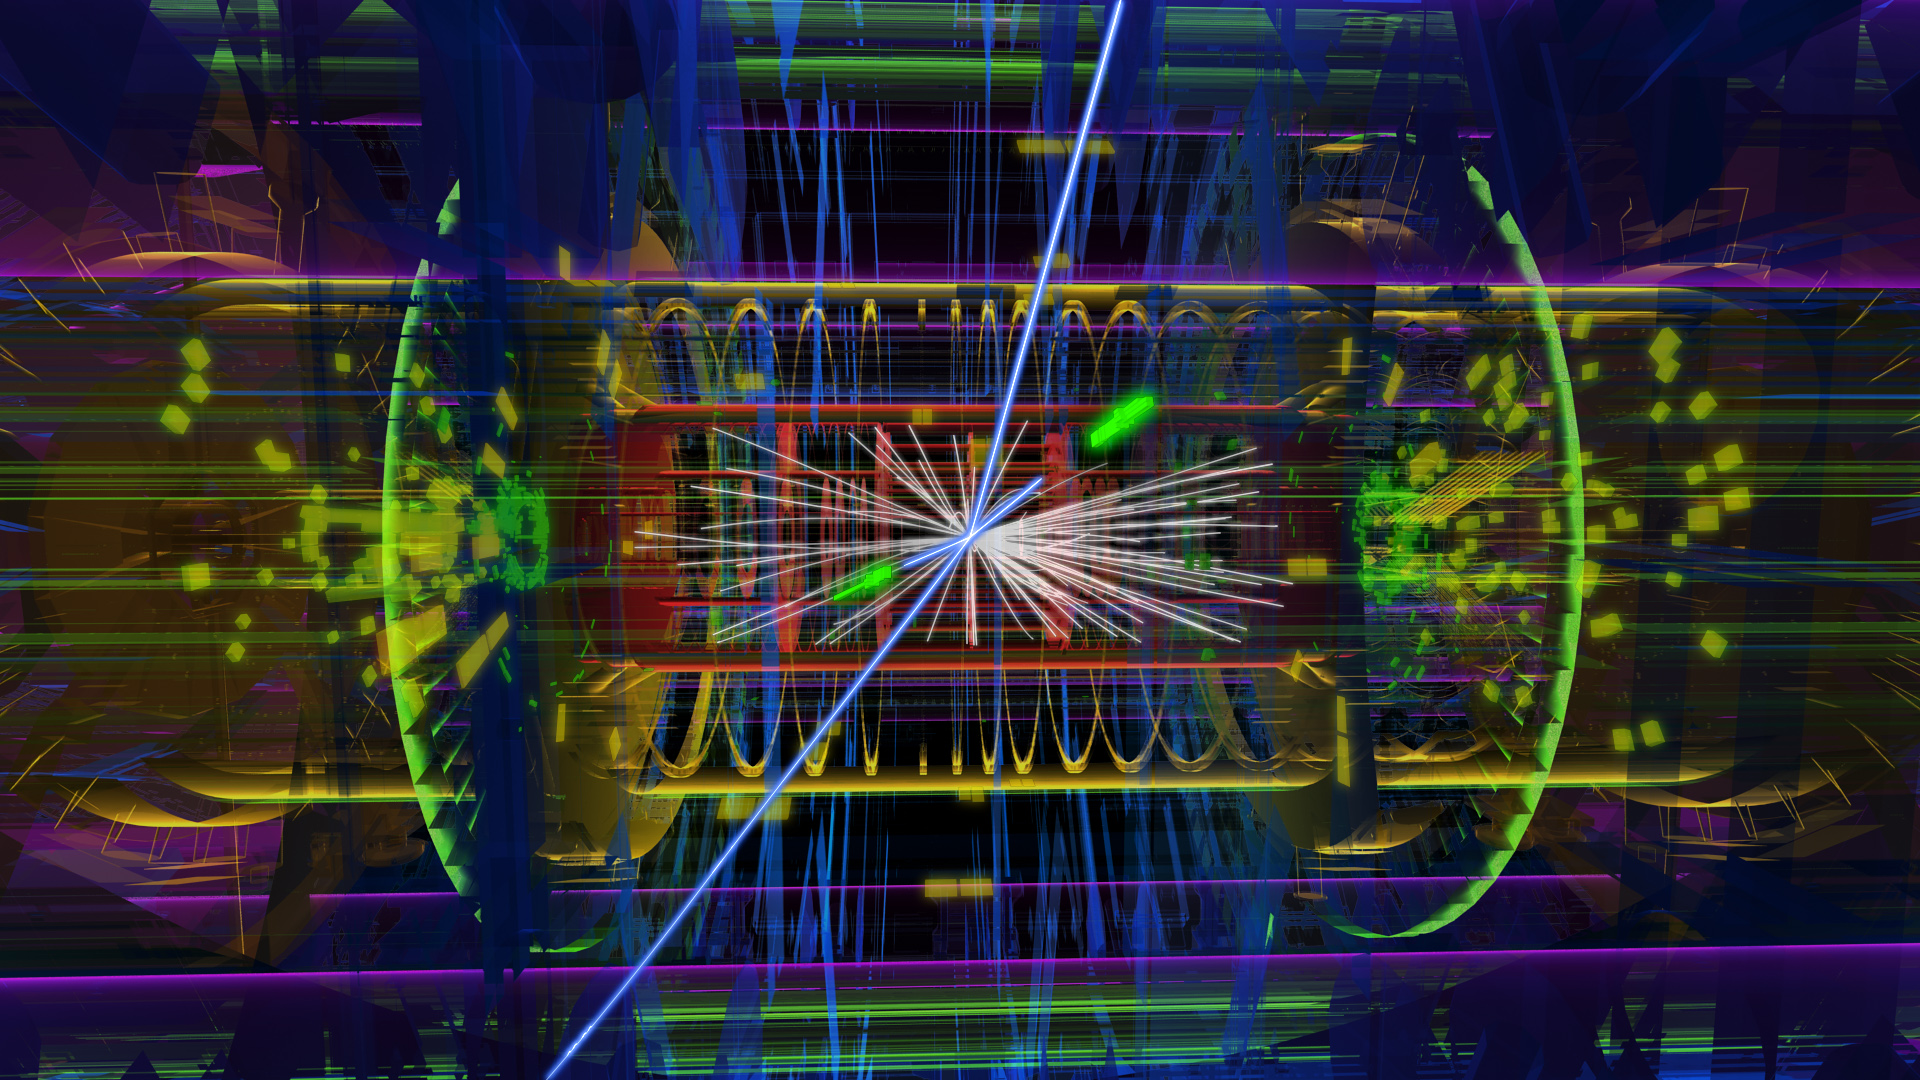 higgs event atlas detector CERN LHC